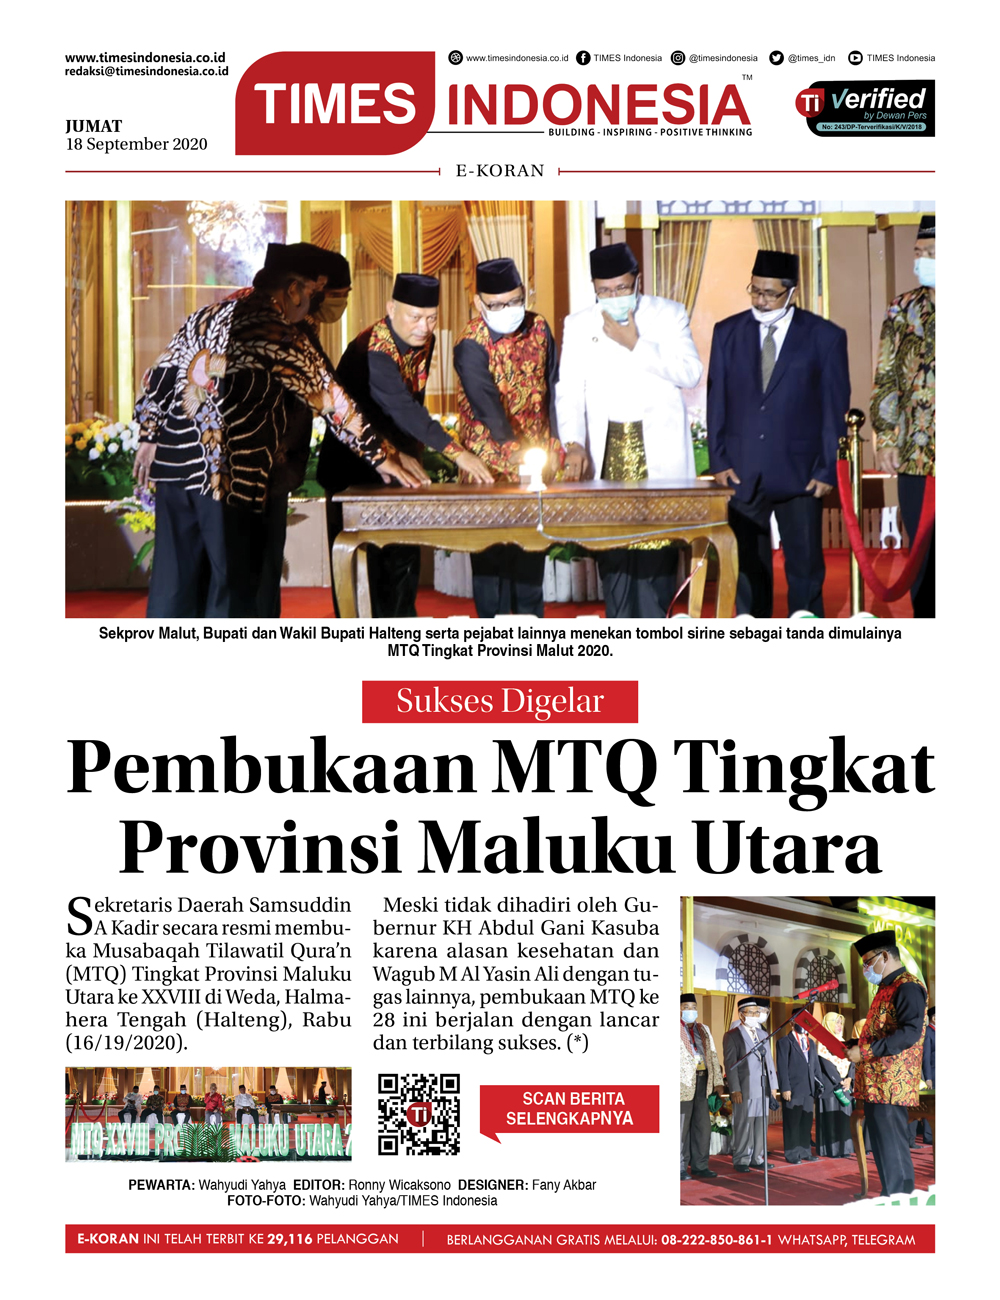 Edisi-Jumat-18-September-2020-Pembukaan-MTQ-Tingkat-Provinsi-Maluku-Utara.jpg